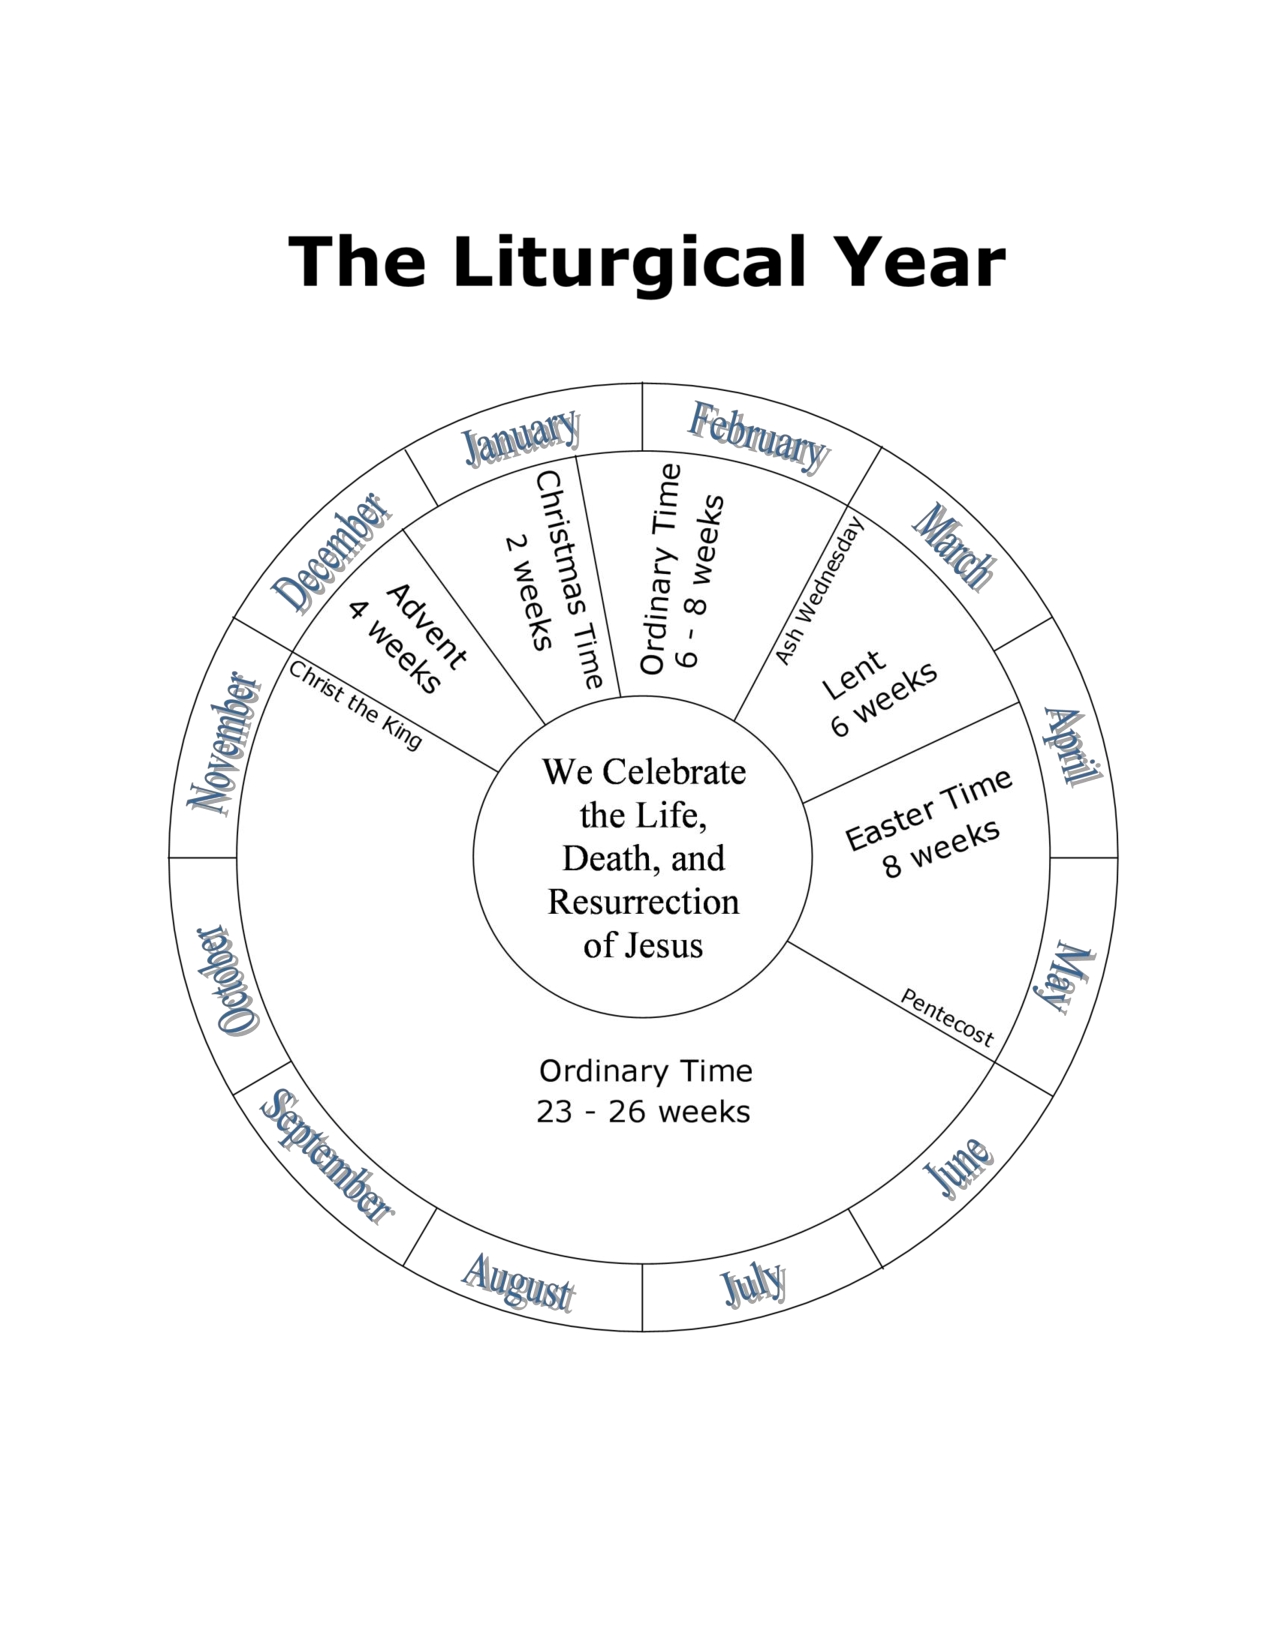 Liturgical Calendar Clipart within Liturgical Year 2020 Lesson Plan